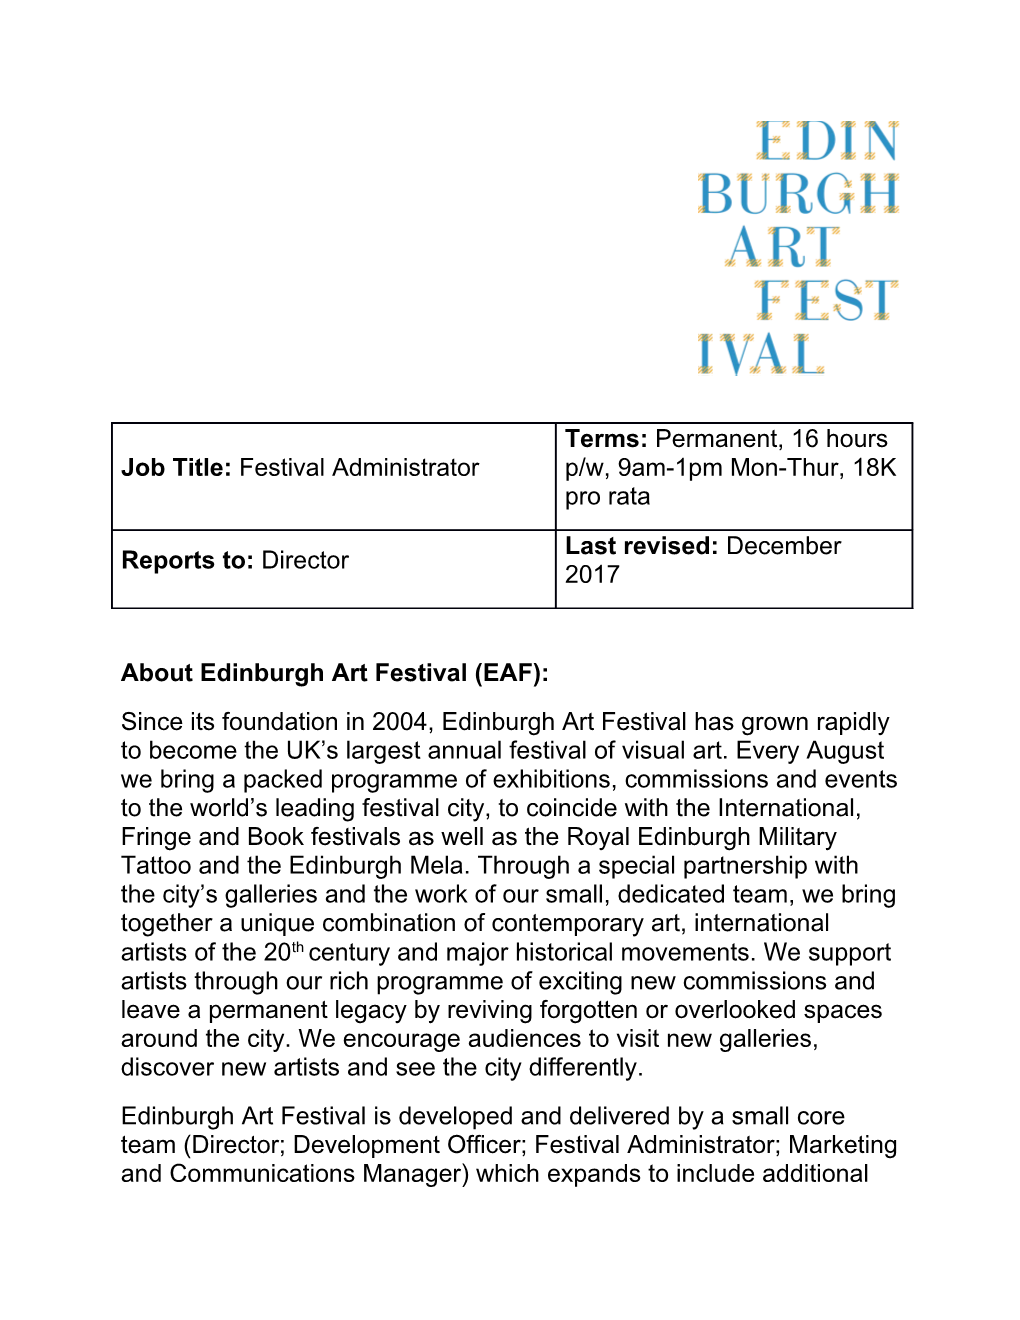 About Edinburgh Art Festival (EAF)